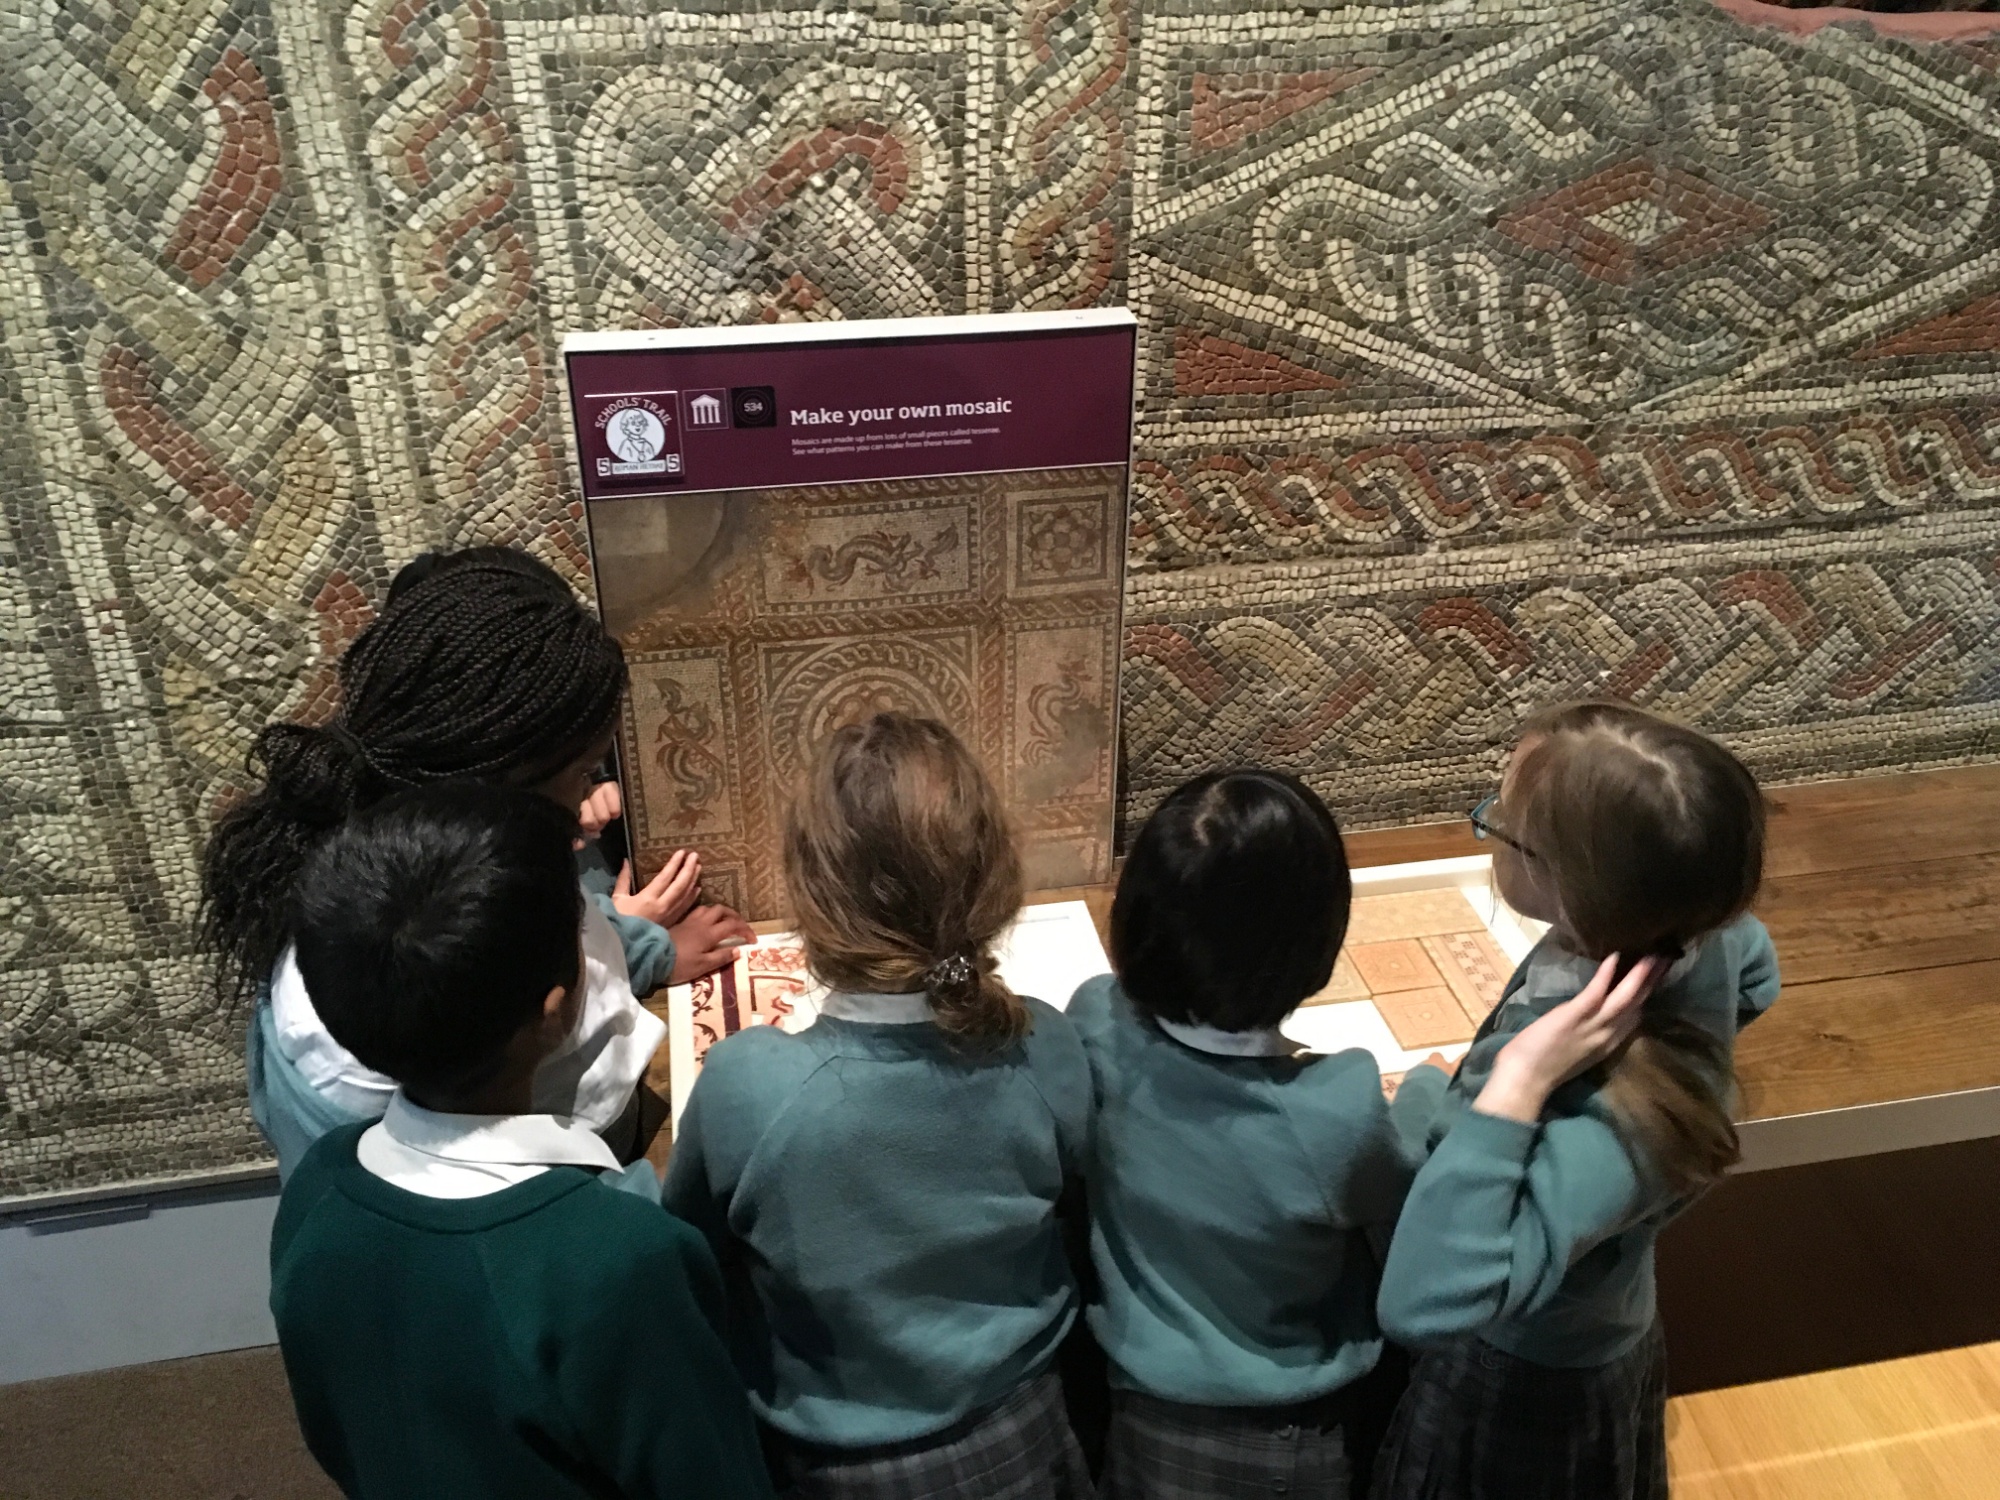 Year 4 pupils make their own mosaic